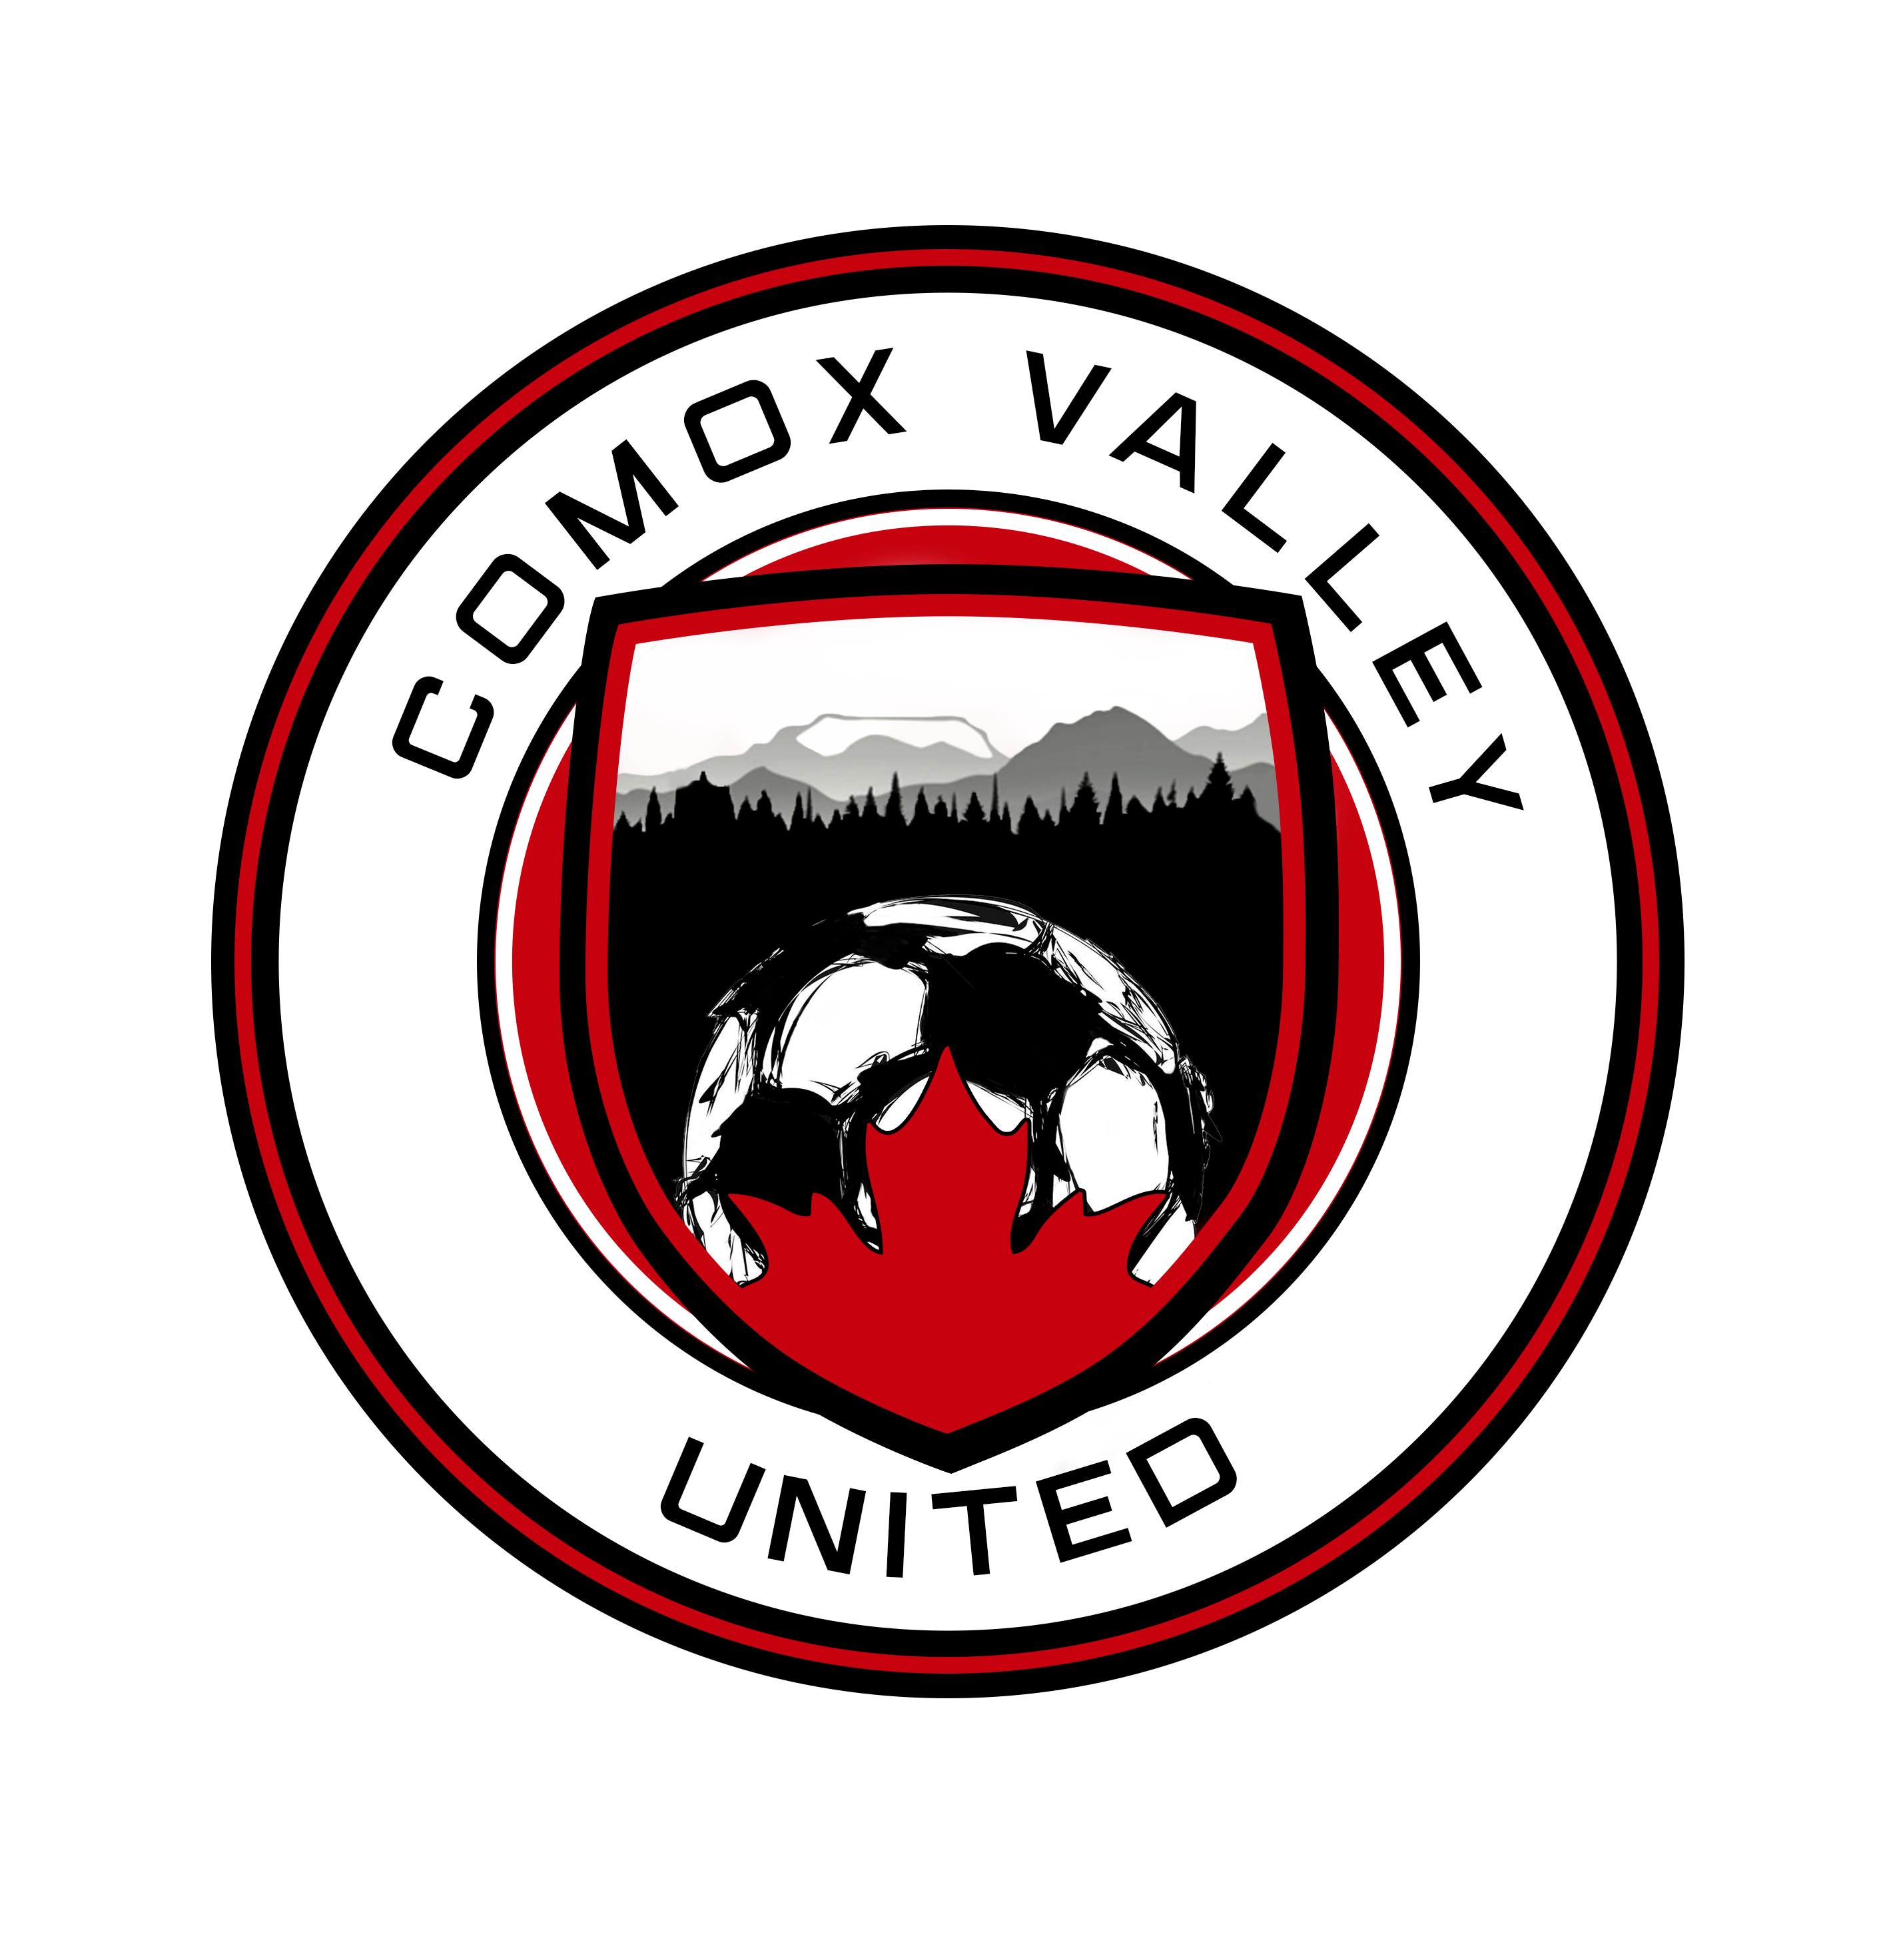 Comox Valley United Soccer Club